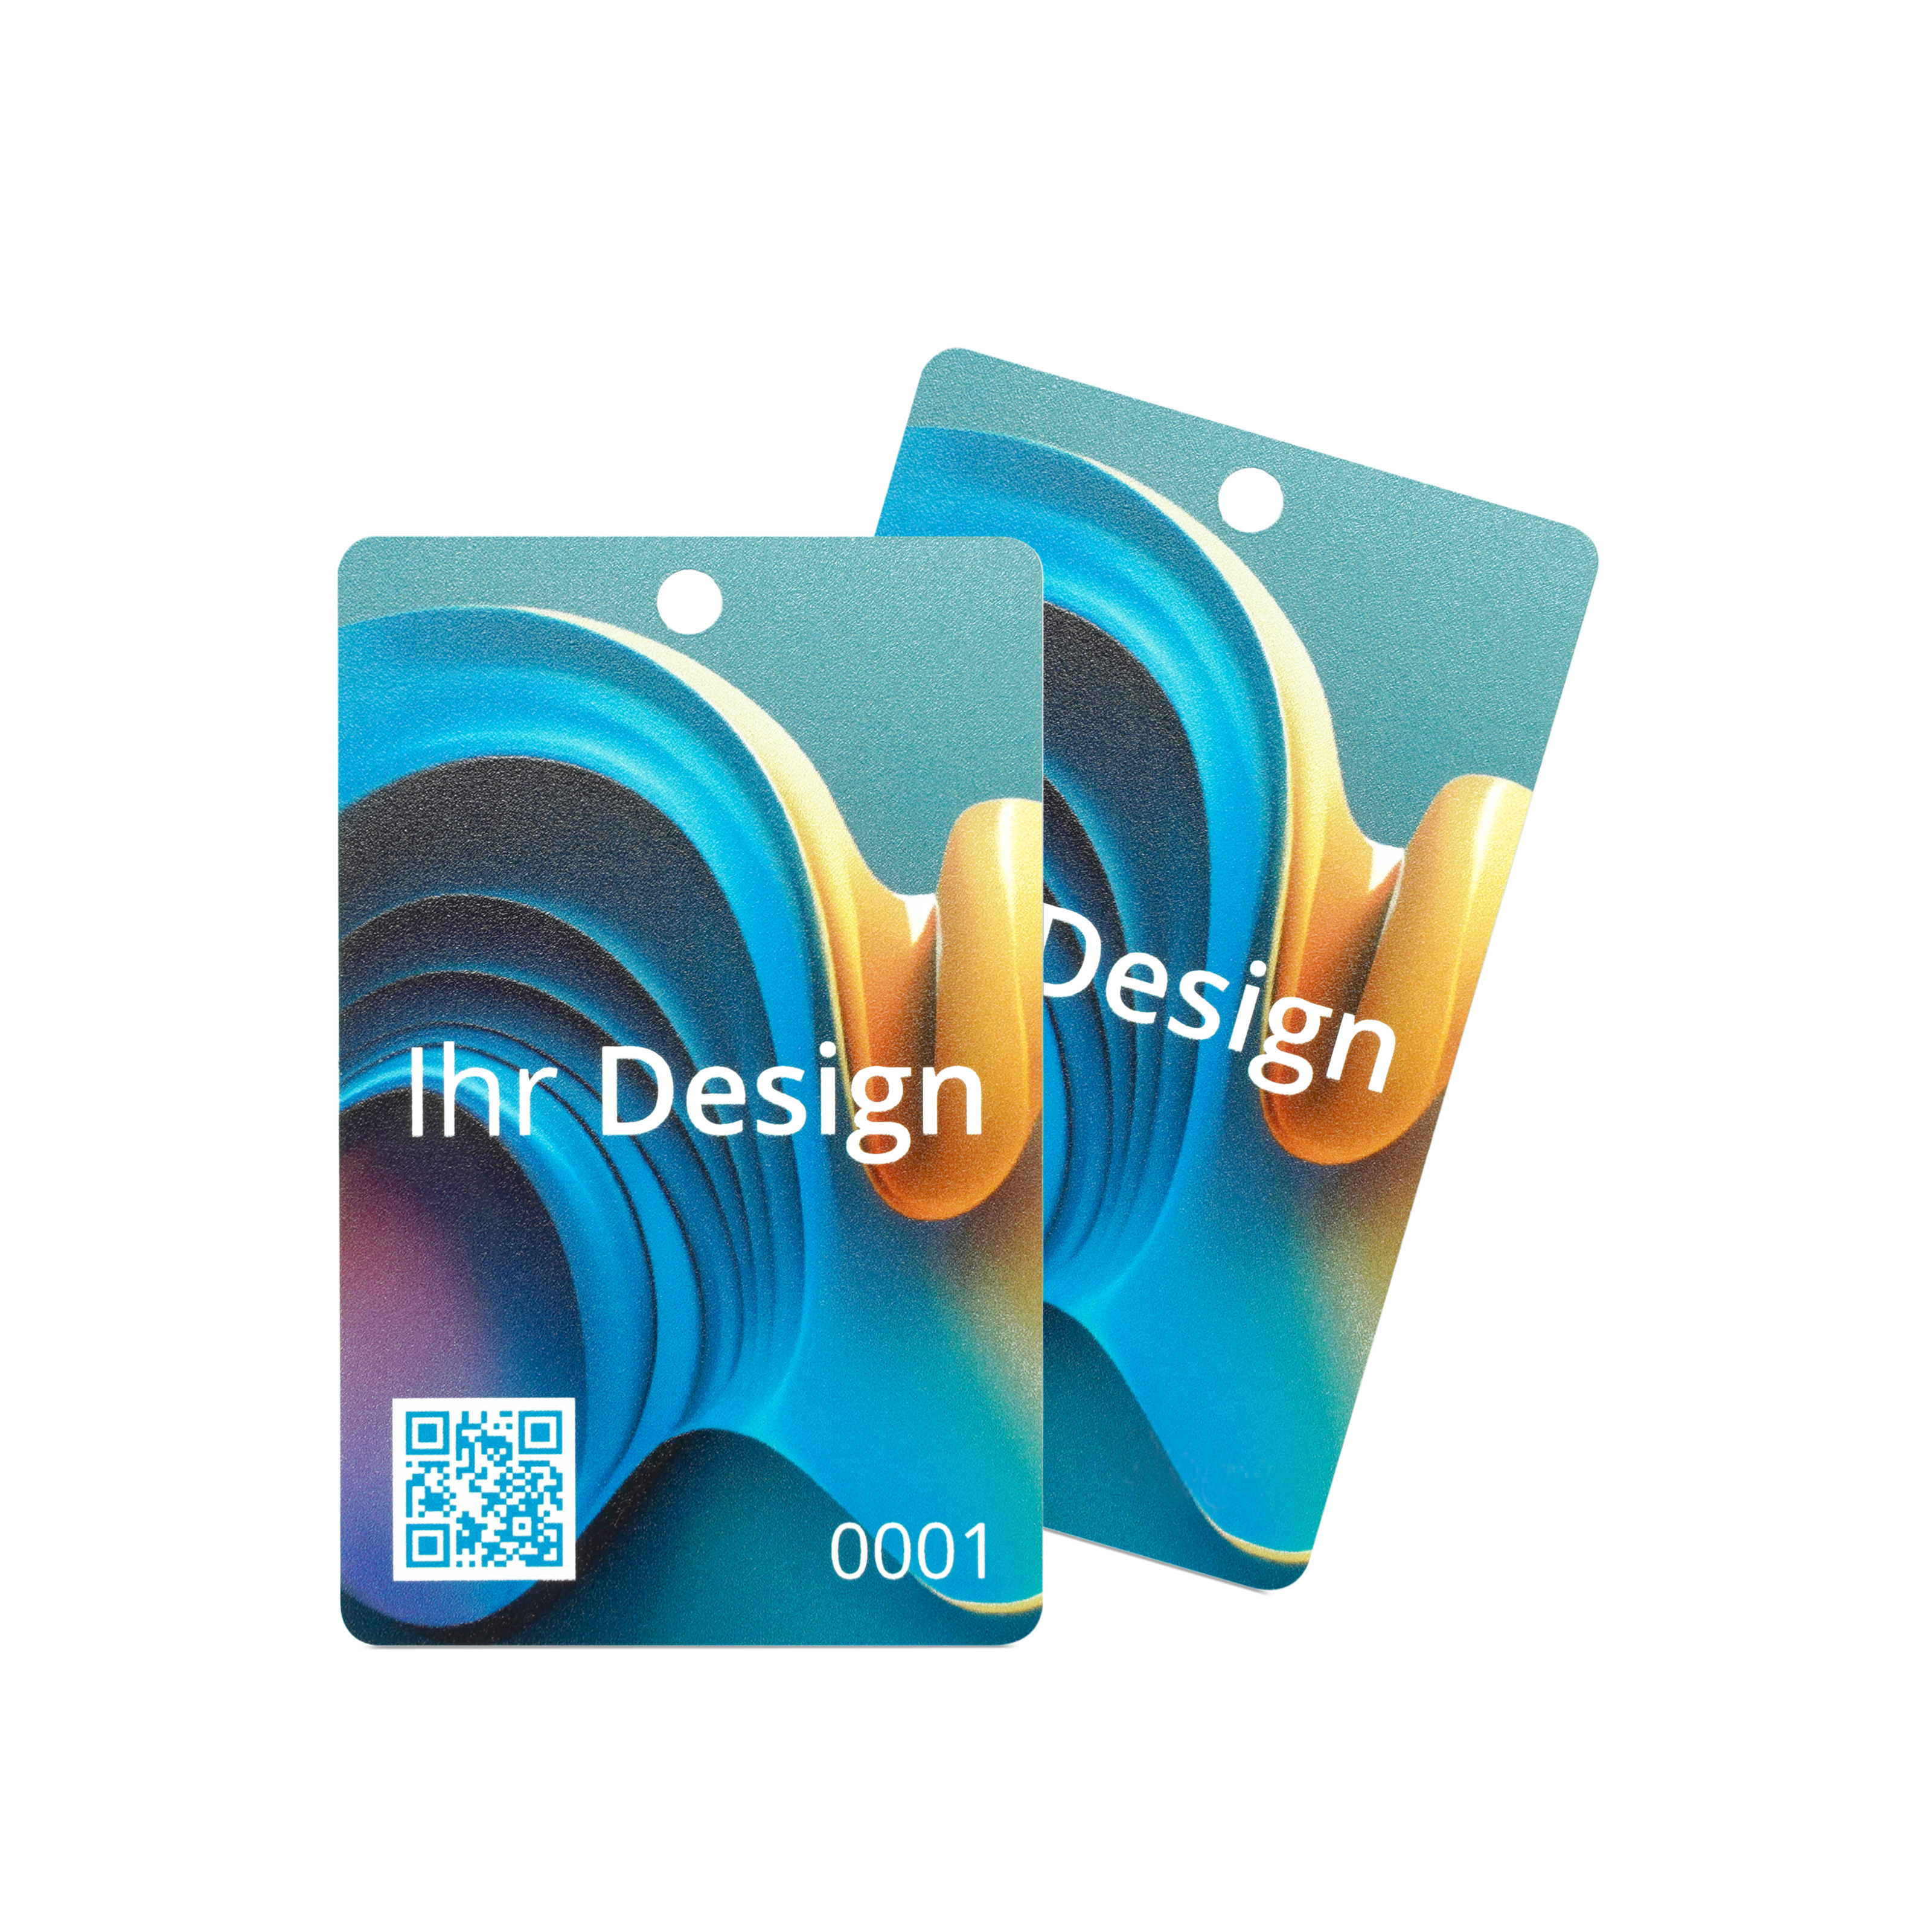 NFC Karte PVC beidseitig bedruckt - 85,6 x 54 mm - NTAG216 - 924 Byte - weiß glänzend - Hochformat gelocht